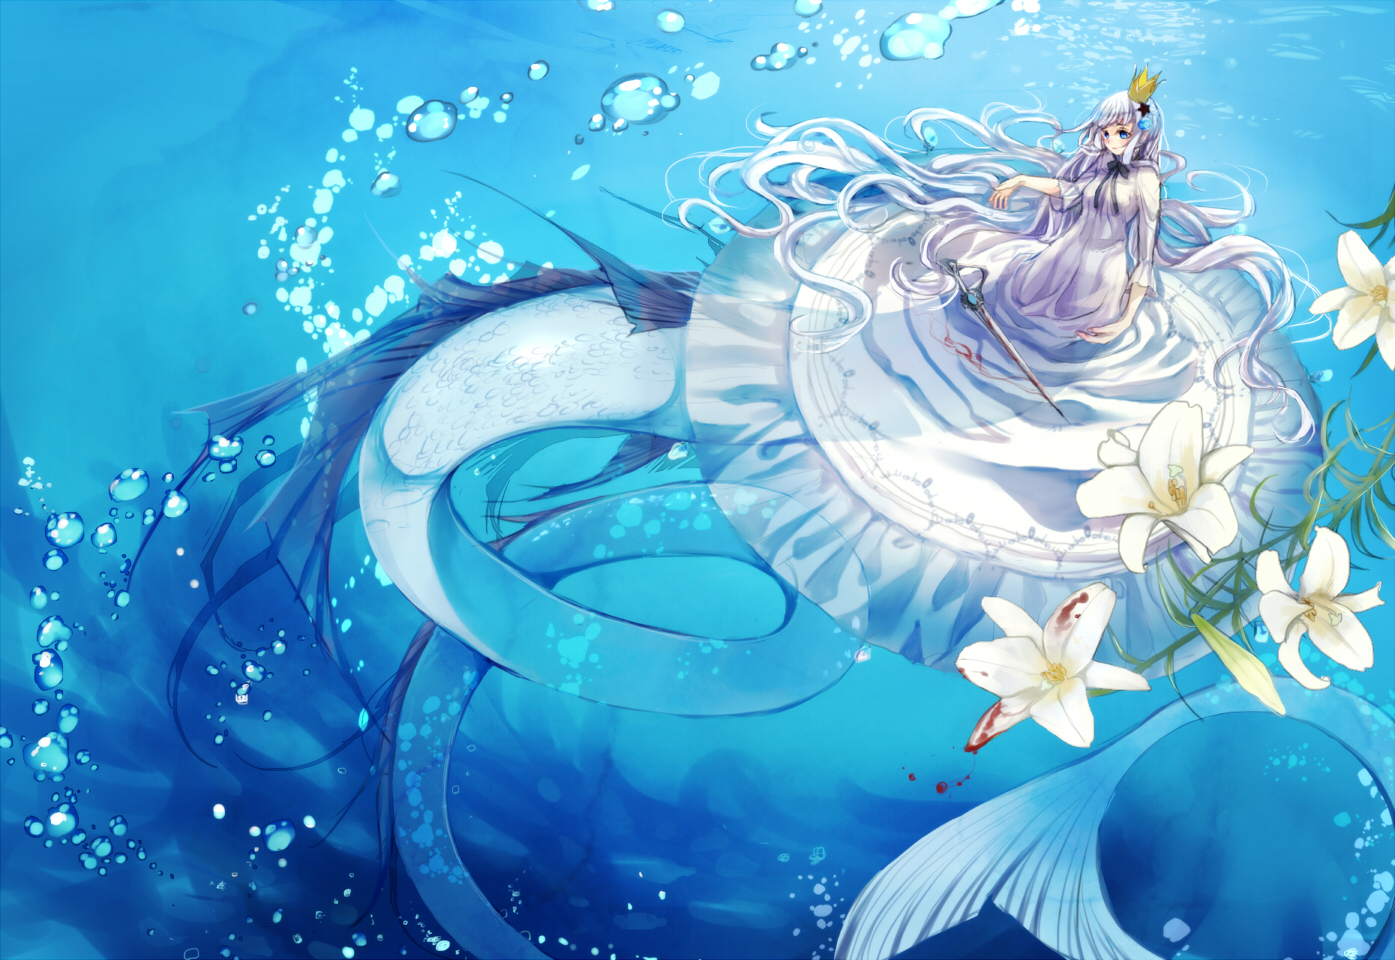 Anime Anime Girls Water Flowers Bubbles Tail Mermaids Long Hair Dress Underwater Crown Weapon 1395x960